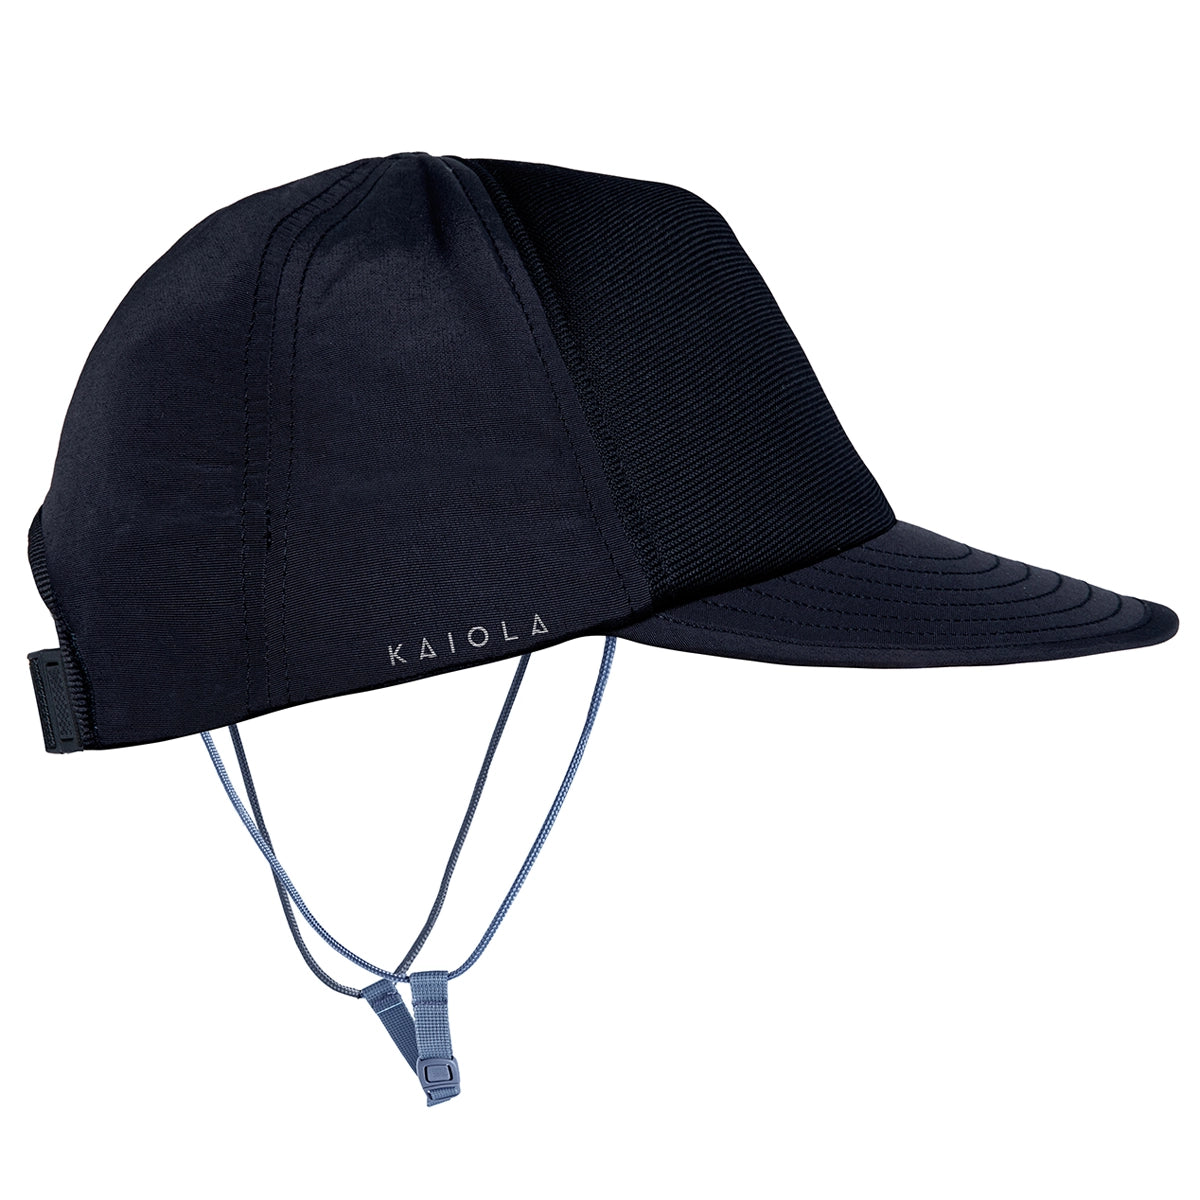 Kaiola Surf Hat Pure Black New Design Side Logo